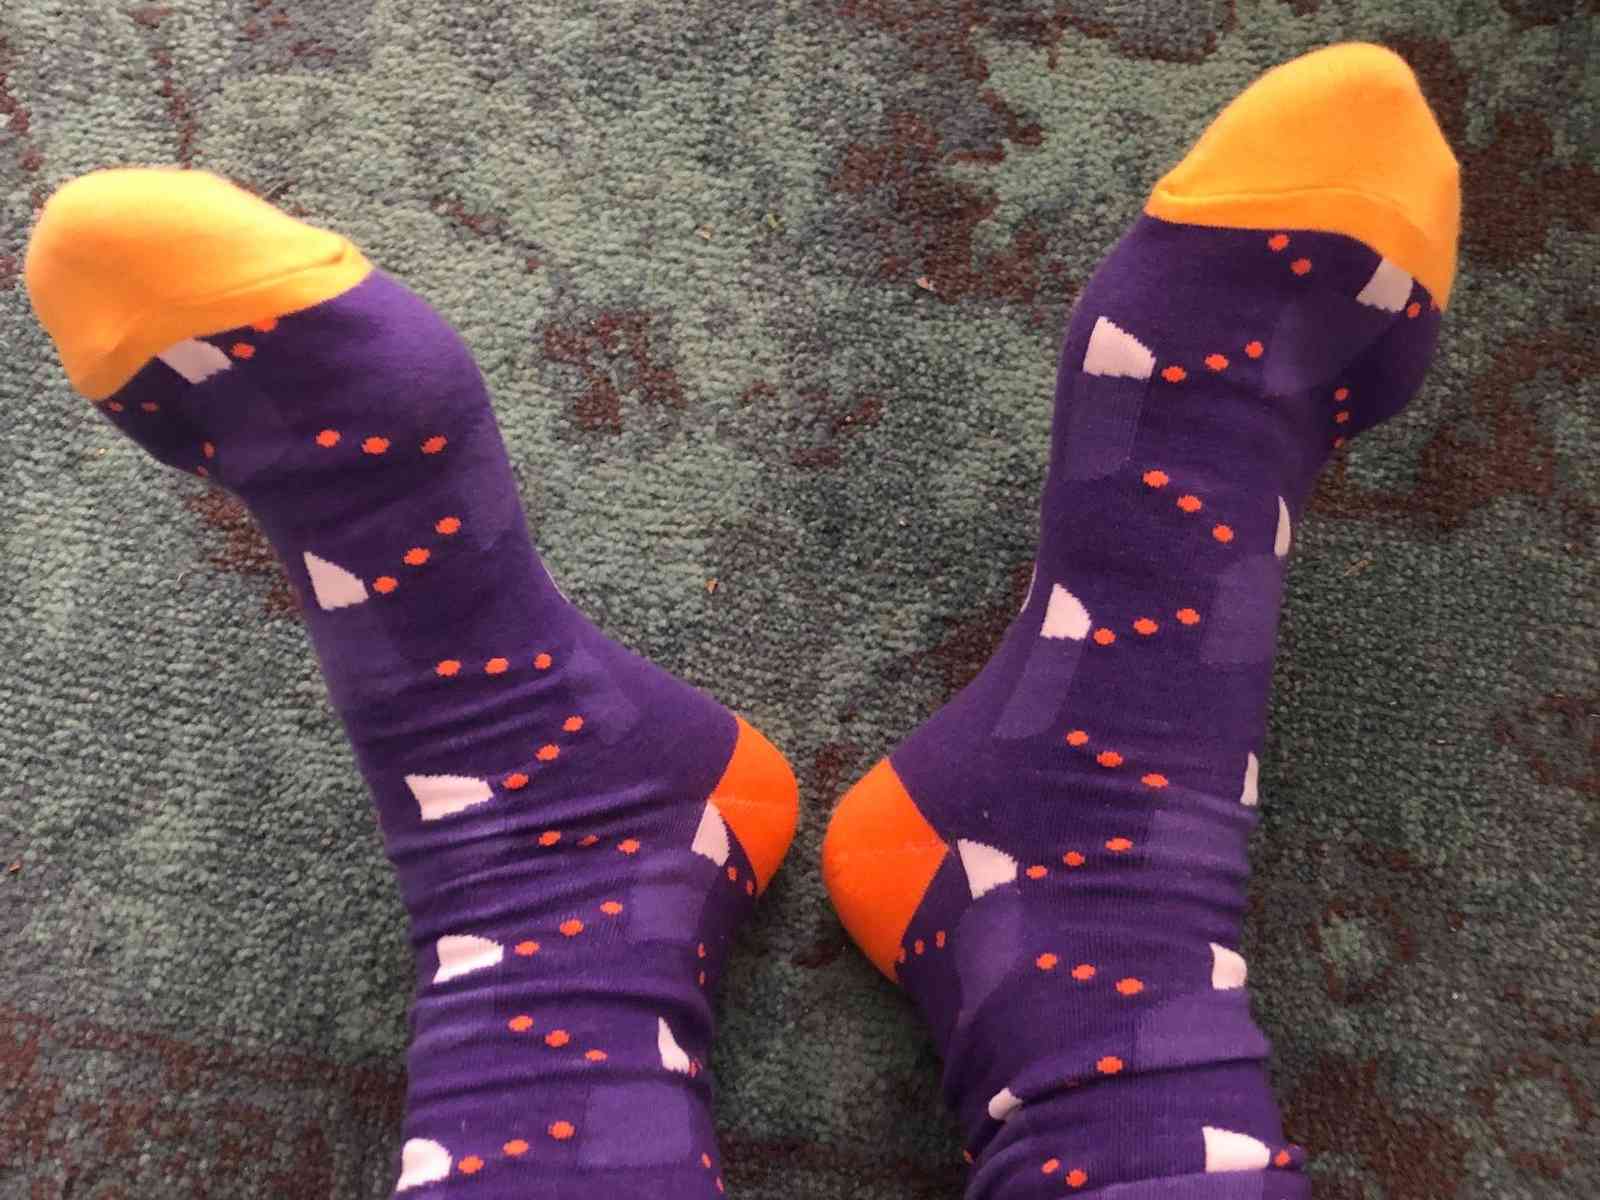 GitLab socks